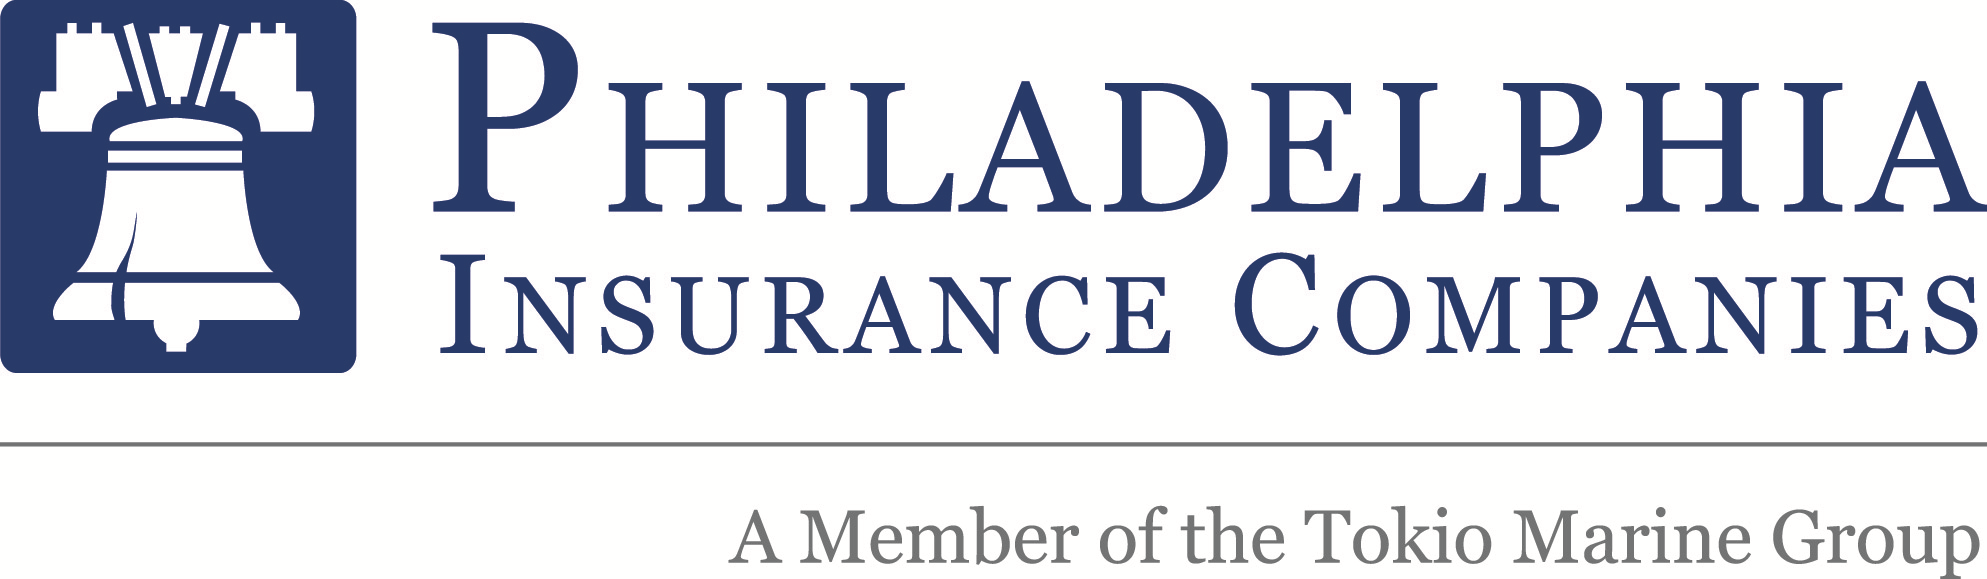 Philadelphia Insurance Companies Company Logo